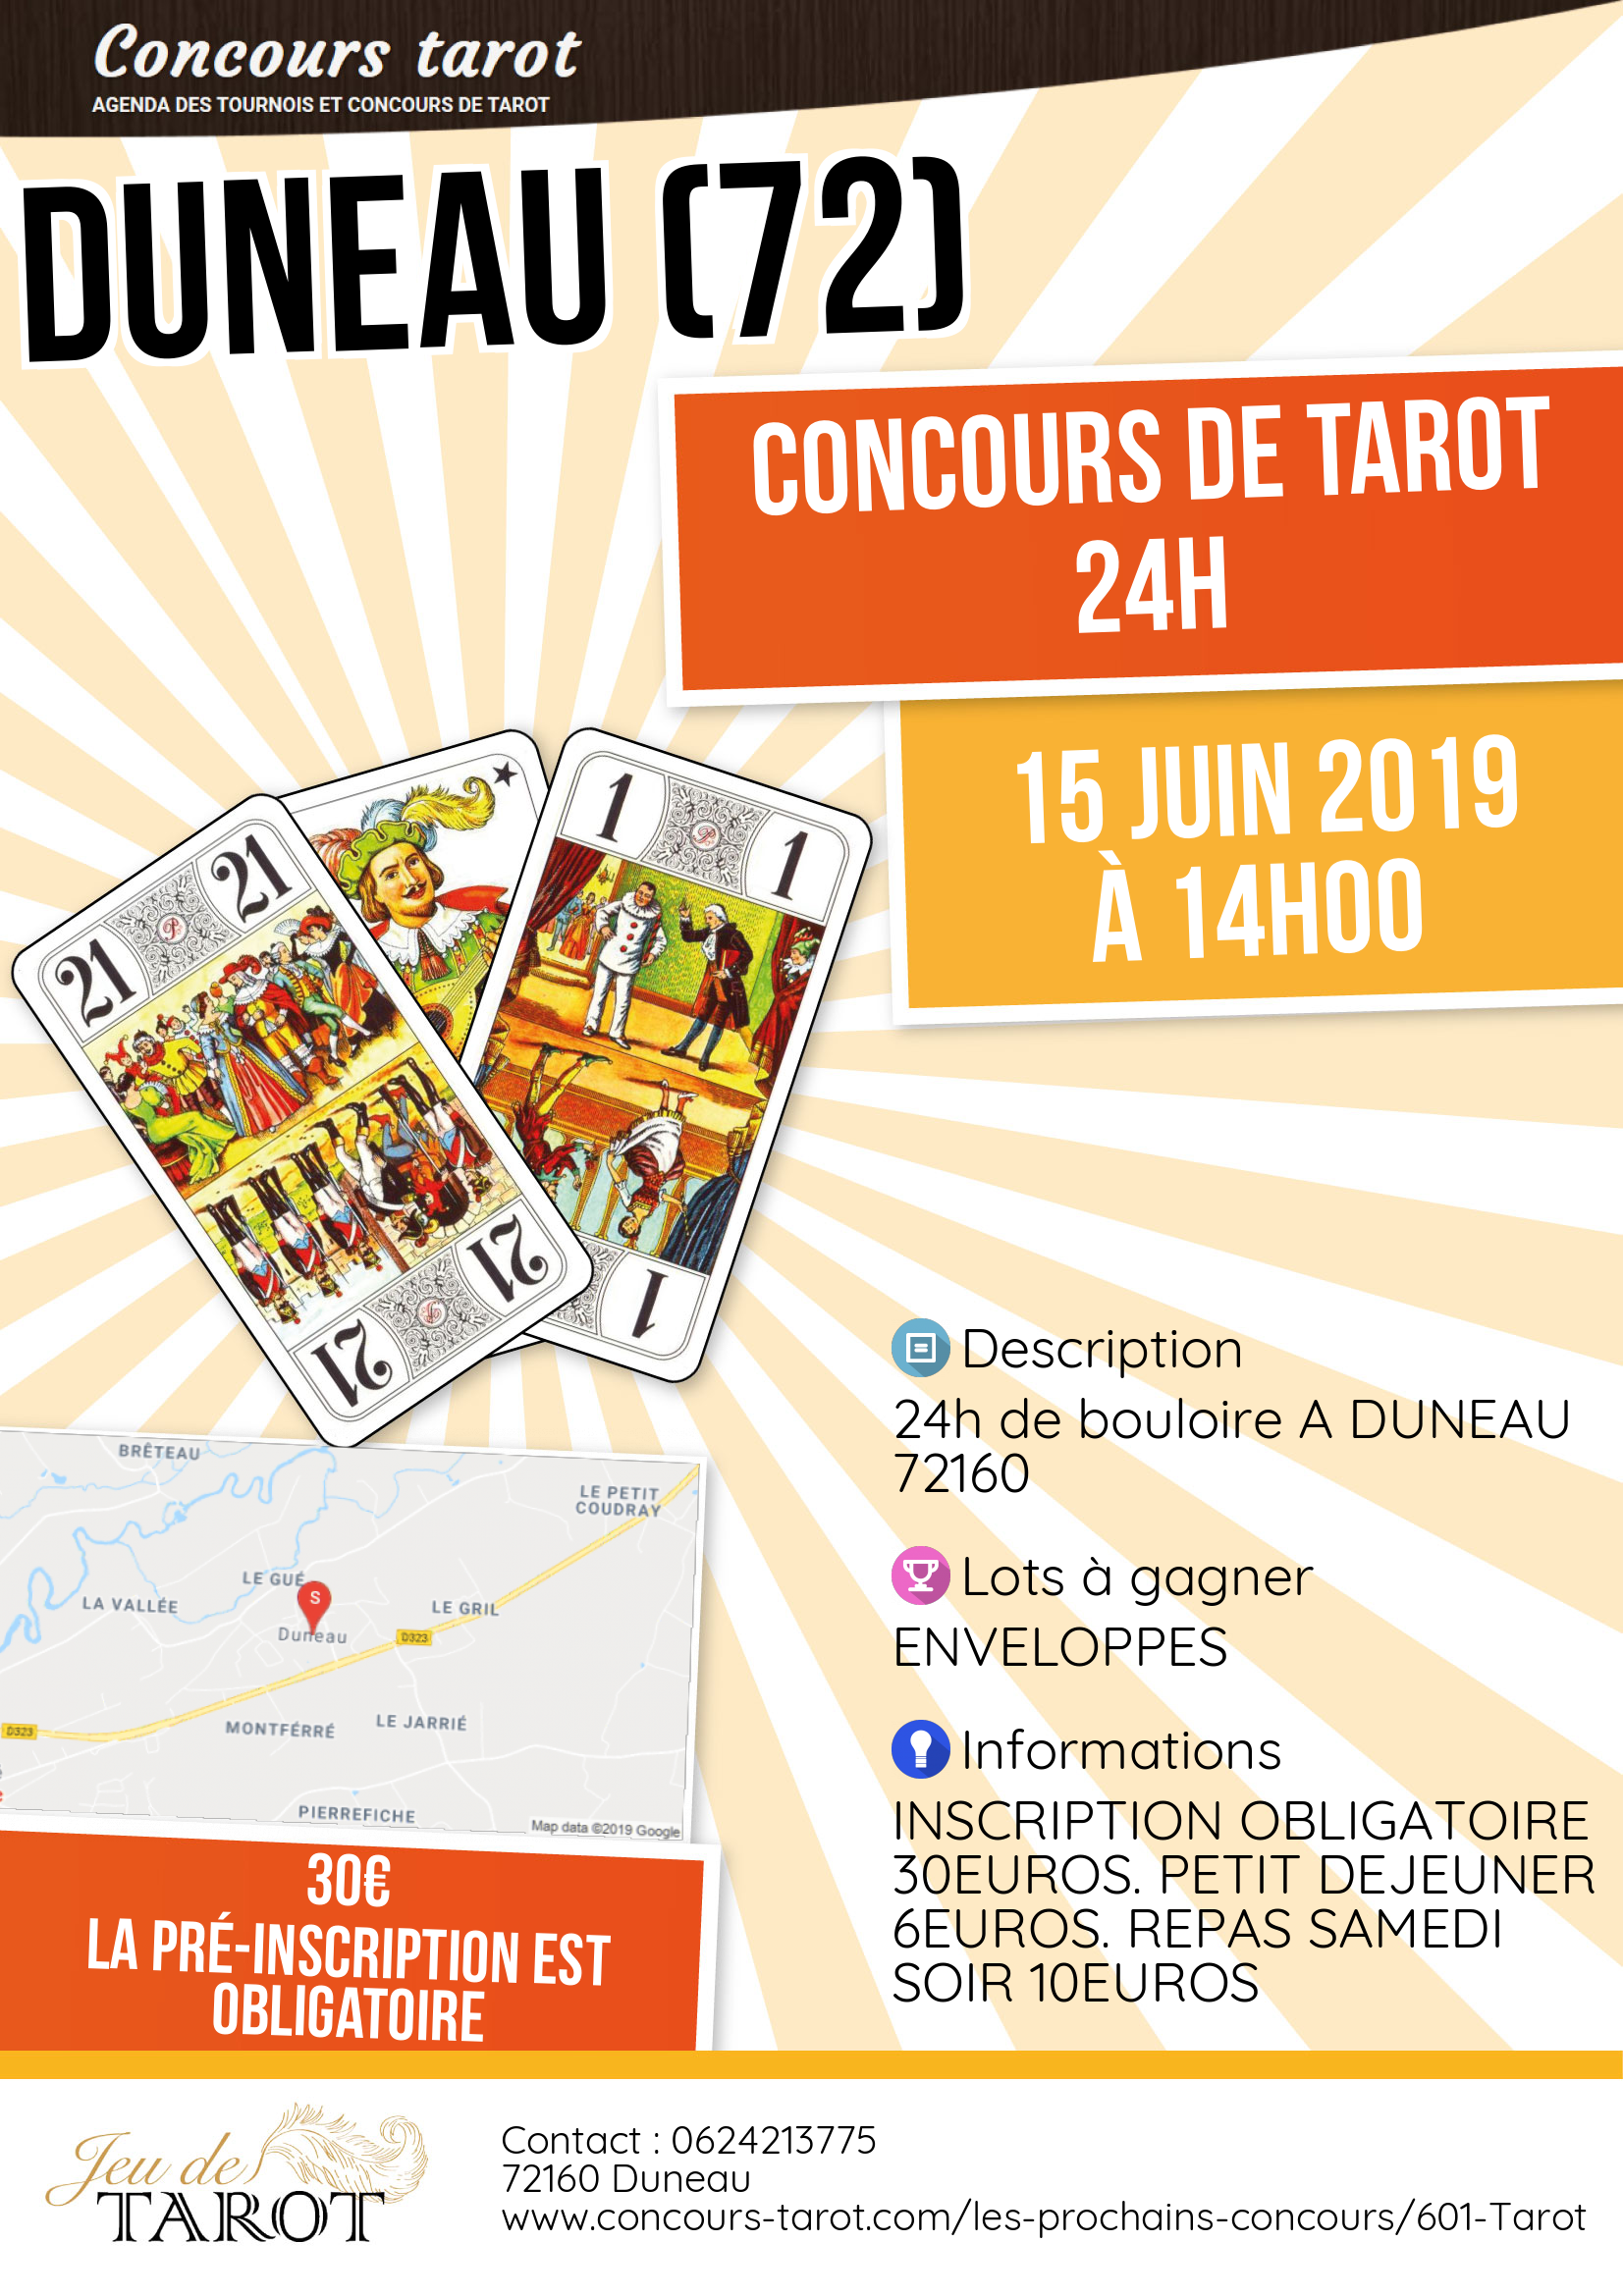 Concours de tarot 24h